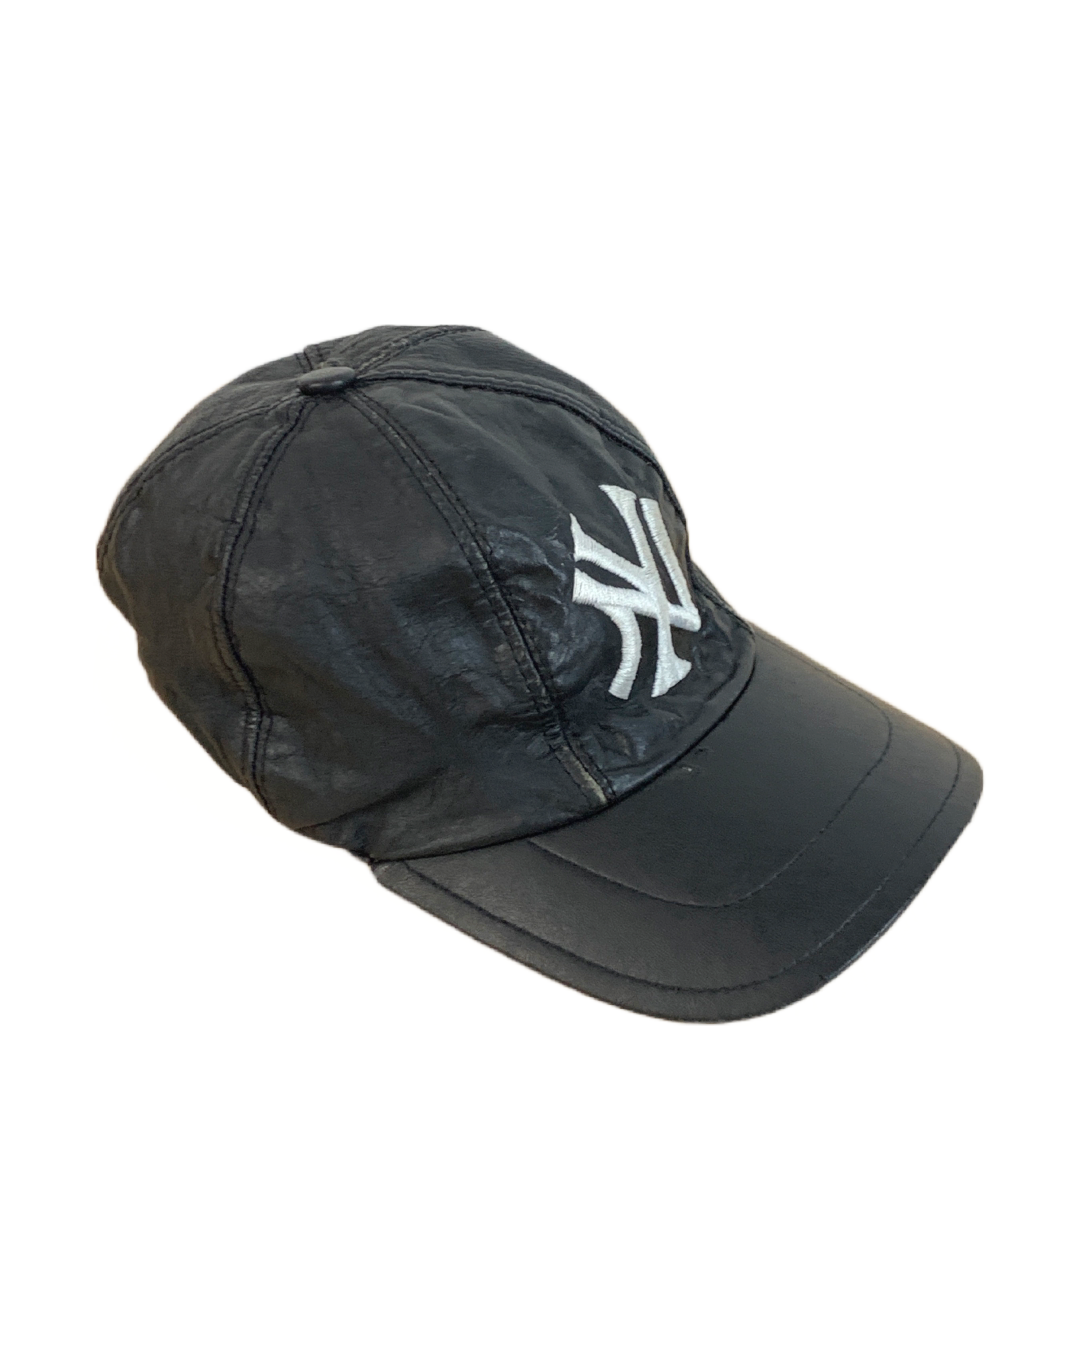 NY Yankees Vintage Cap